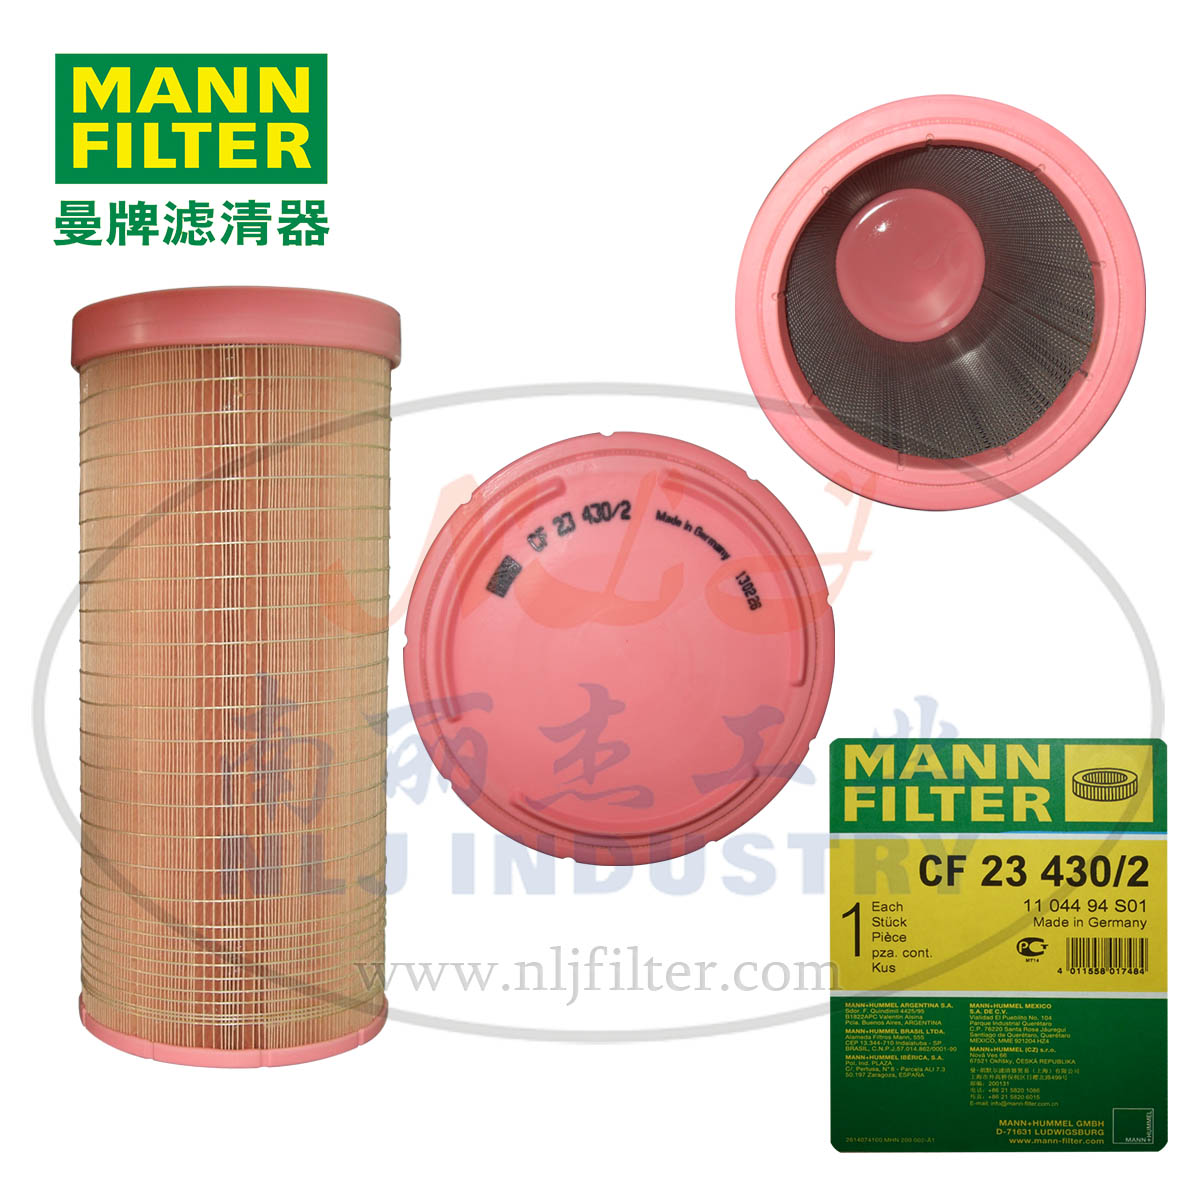 MANN-FILTER曼牌滤清器空气滤芯CF23430/2